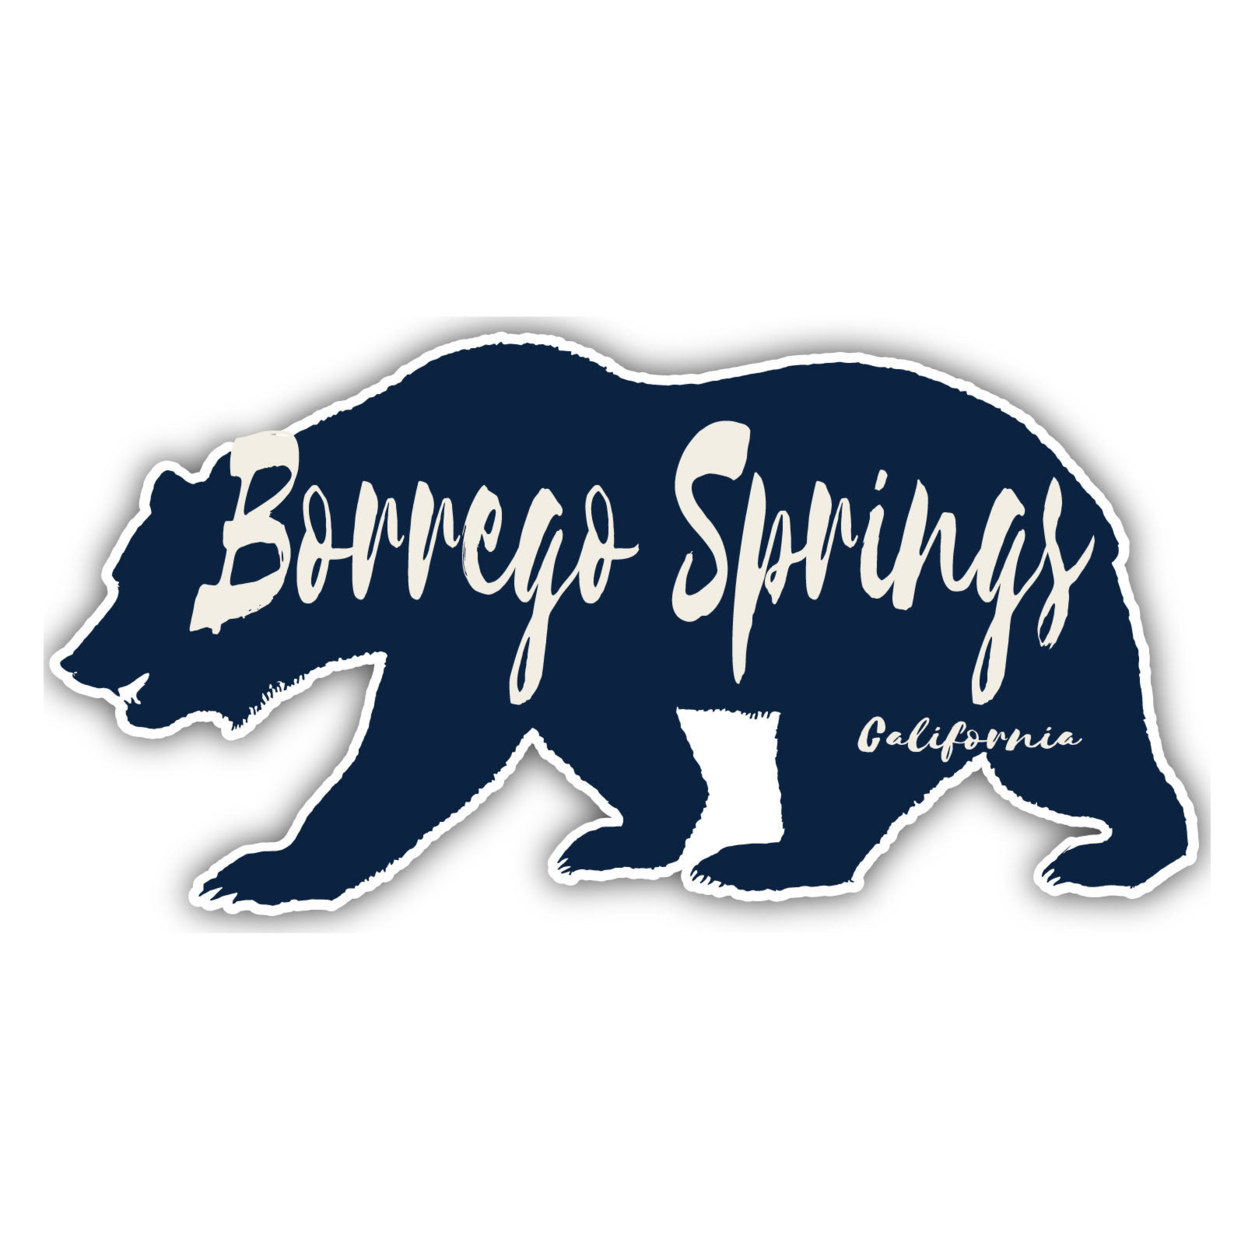 Borrego Springs California Souvenir Decorative Stickers (Choose Theme And Size) - 4-Pack, 2-Inch, Bear